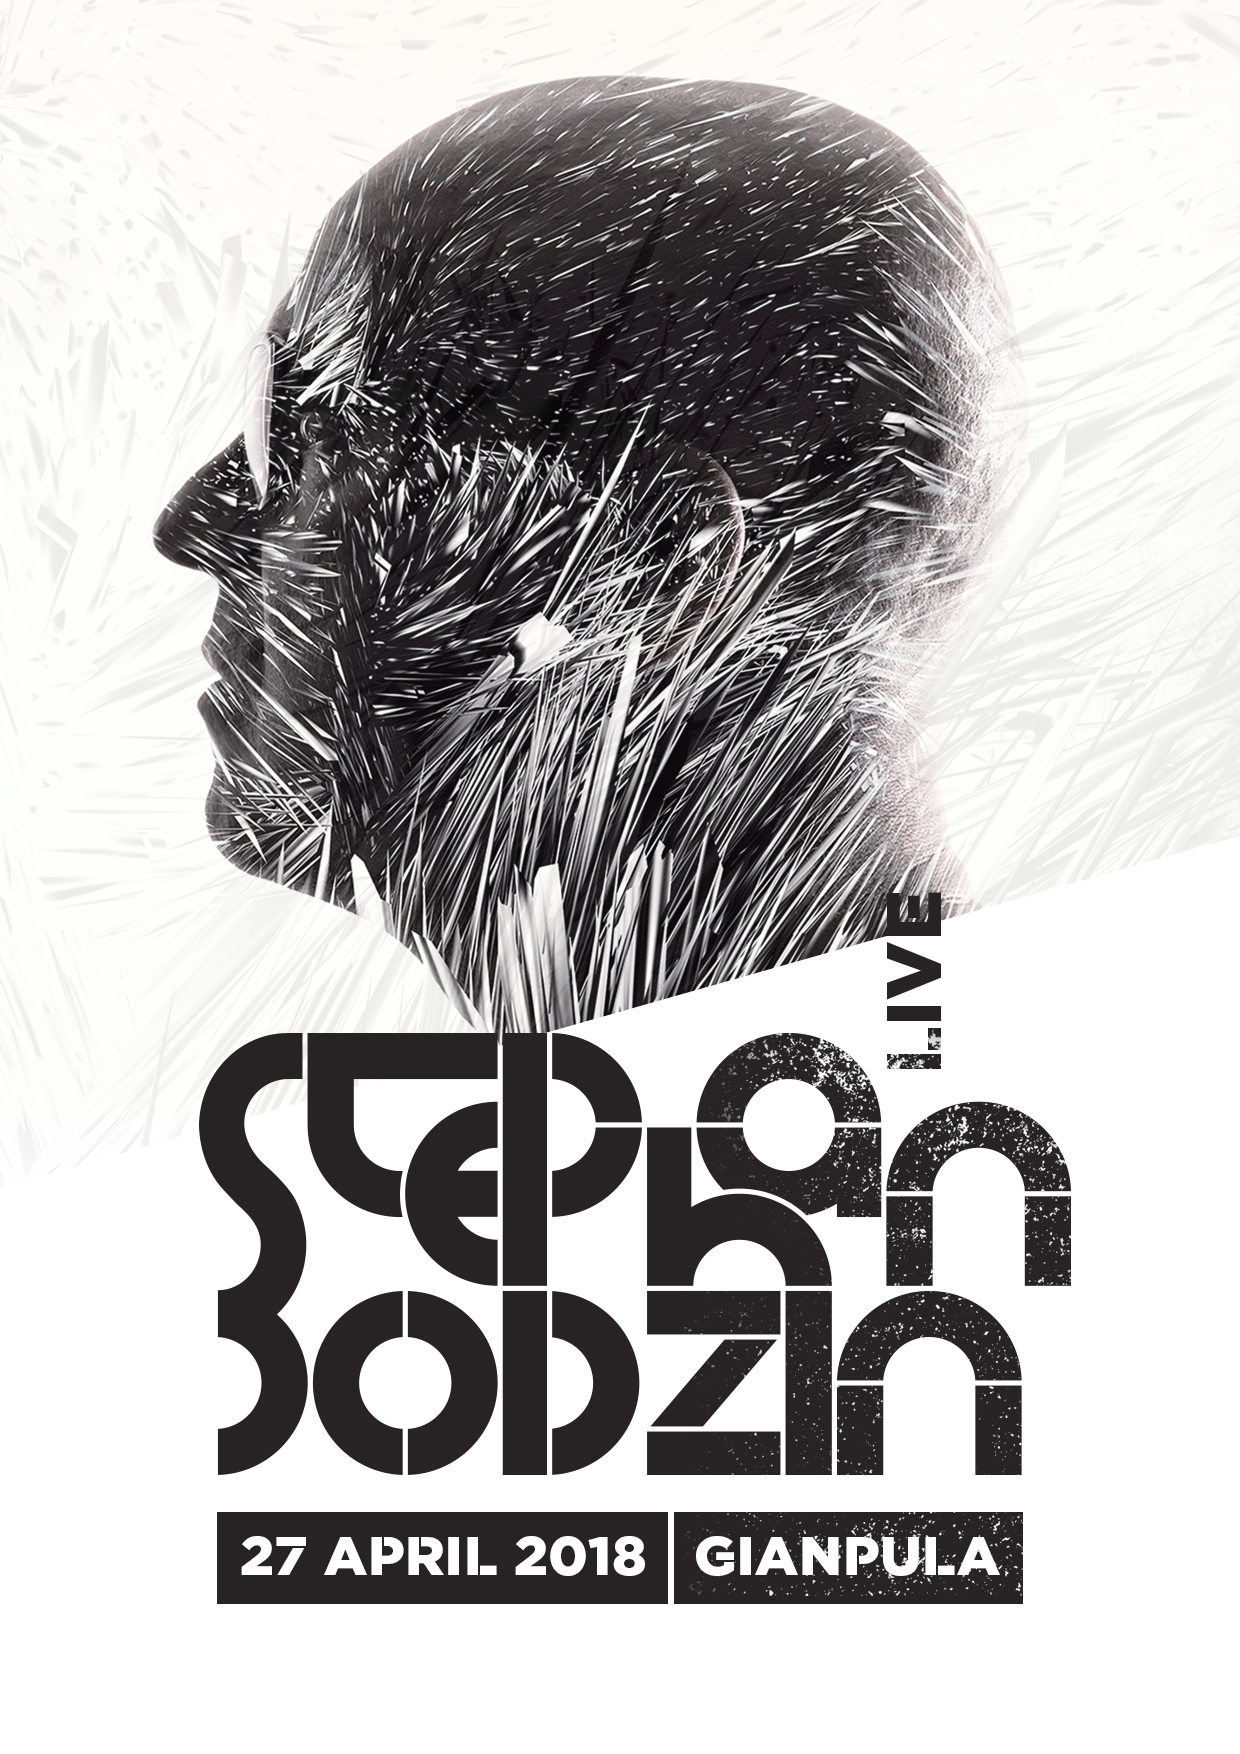 Stephan Bodzin (live) / 27.04.18 poster